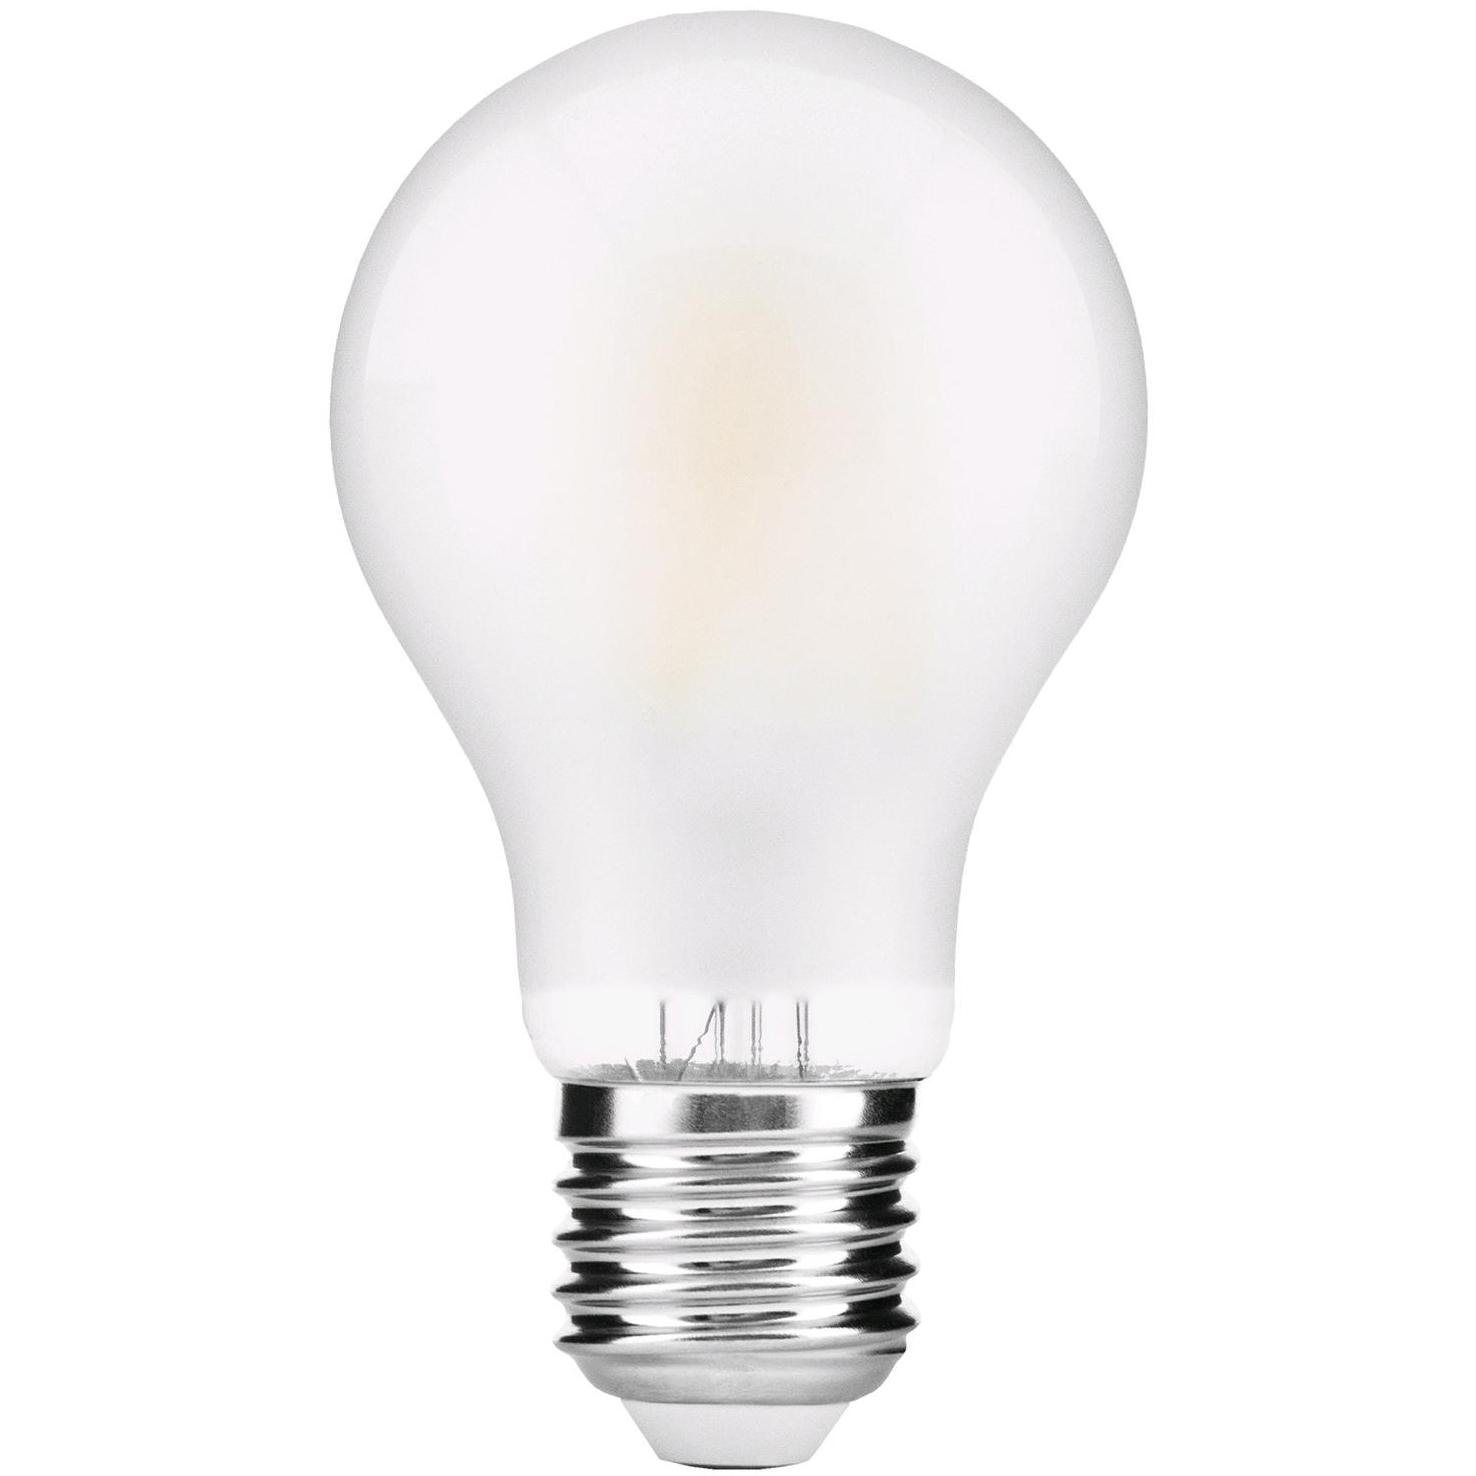 aardolie Bek Post Filament Led Lamp - 1500 Lumen - Philips - Lamptype: E27 - Led, Vermogen:  11 Watt - 230 Volt, Lichtsterkte: 1500 lumen, Afmetingen: Ø70mm/H124mm,  Lichtkleur: Extra warm wit - 2700 K.